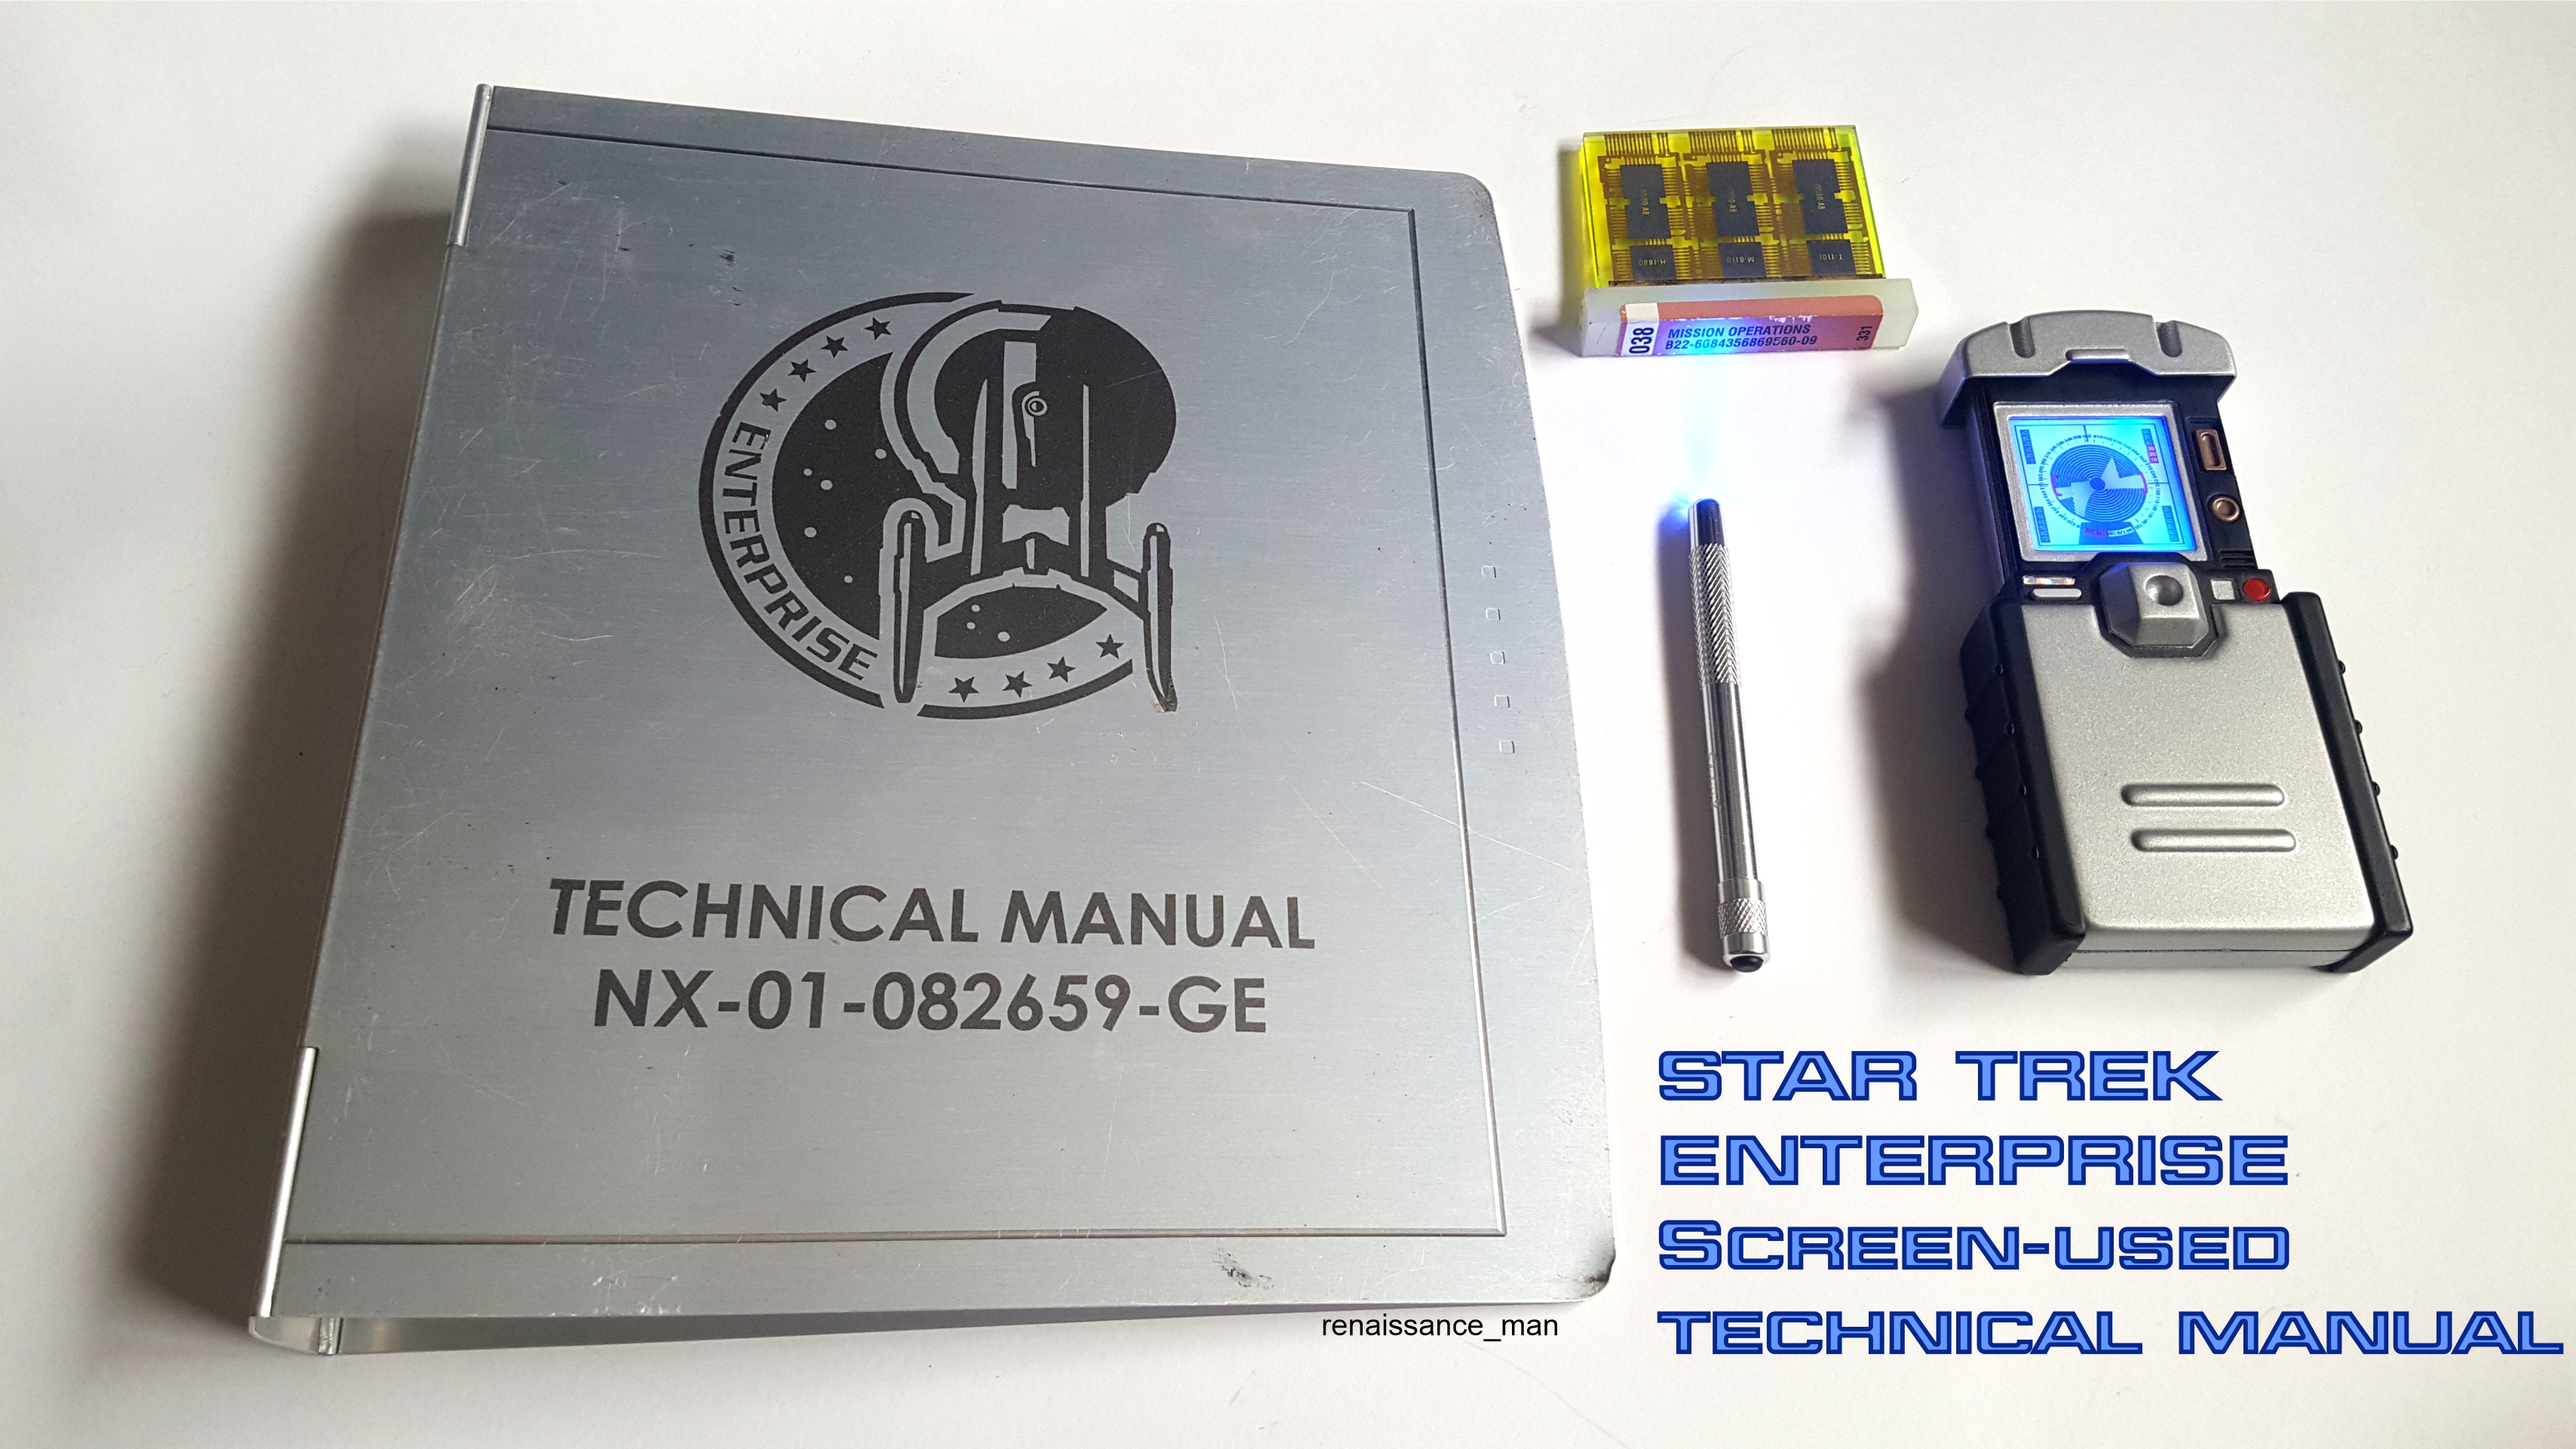 Enterprise-Technical-Manual-plus-others.jpg